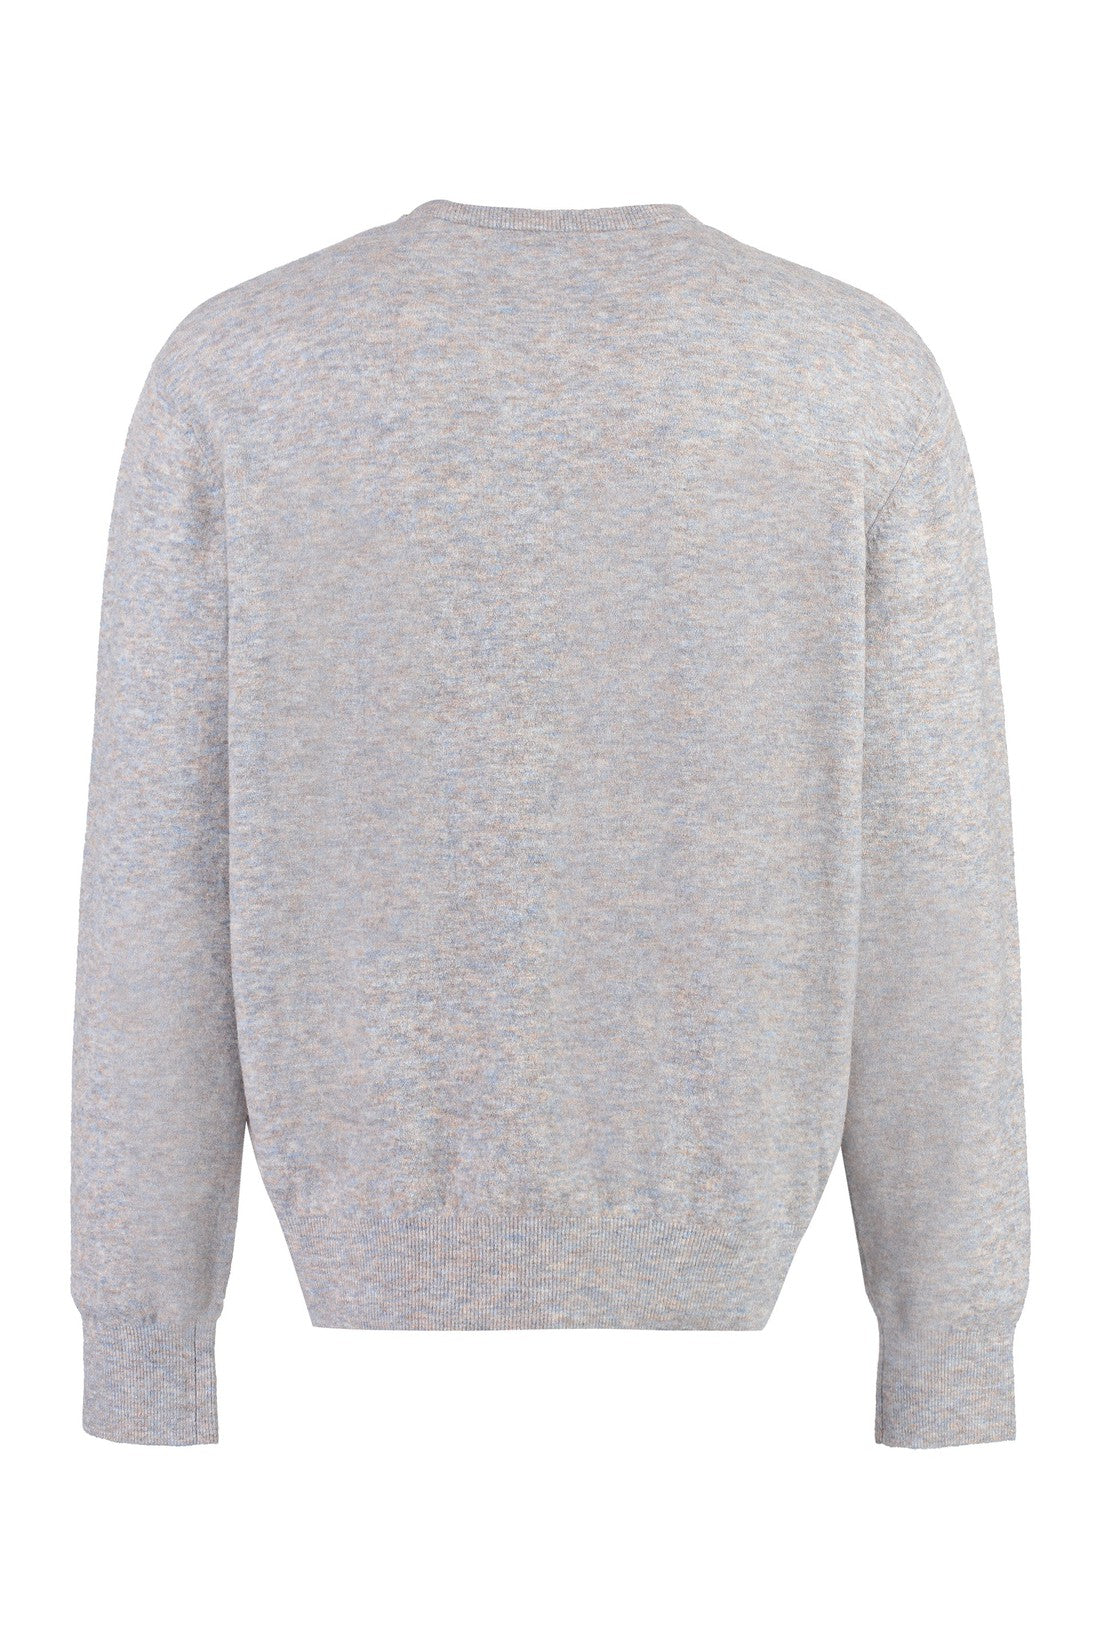 Acne Studios-OUTLET-SALE-Wool blend sweater-ARCHIVIST